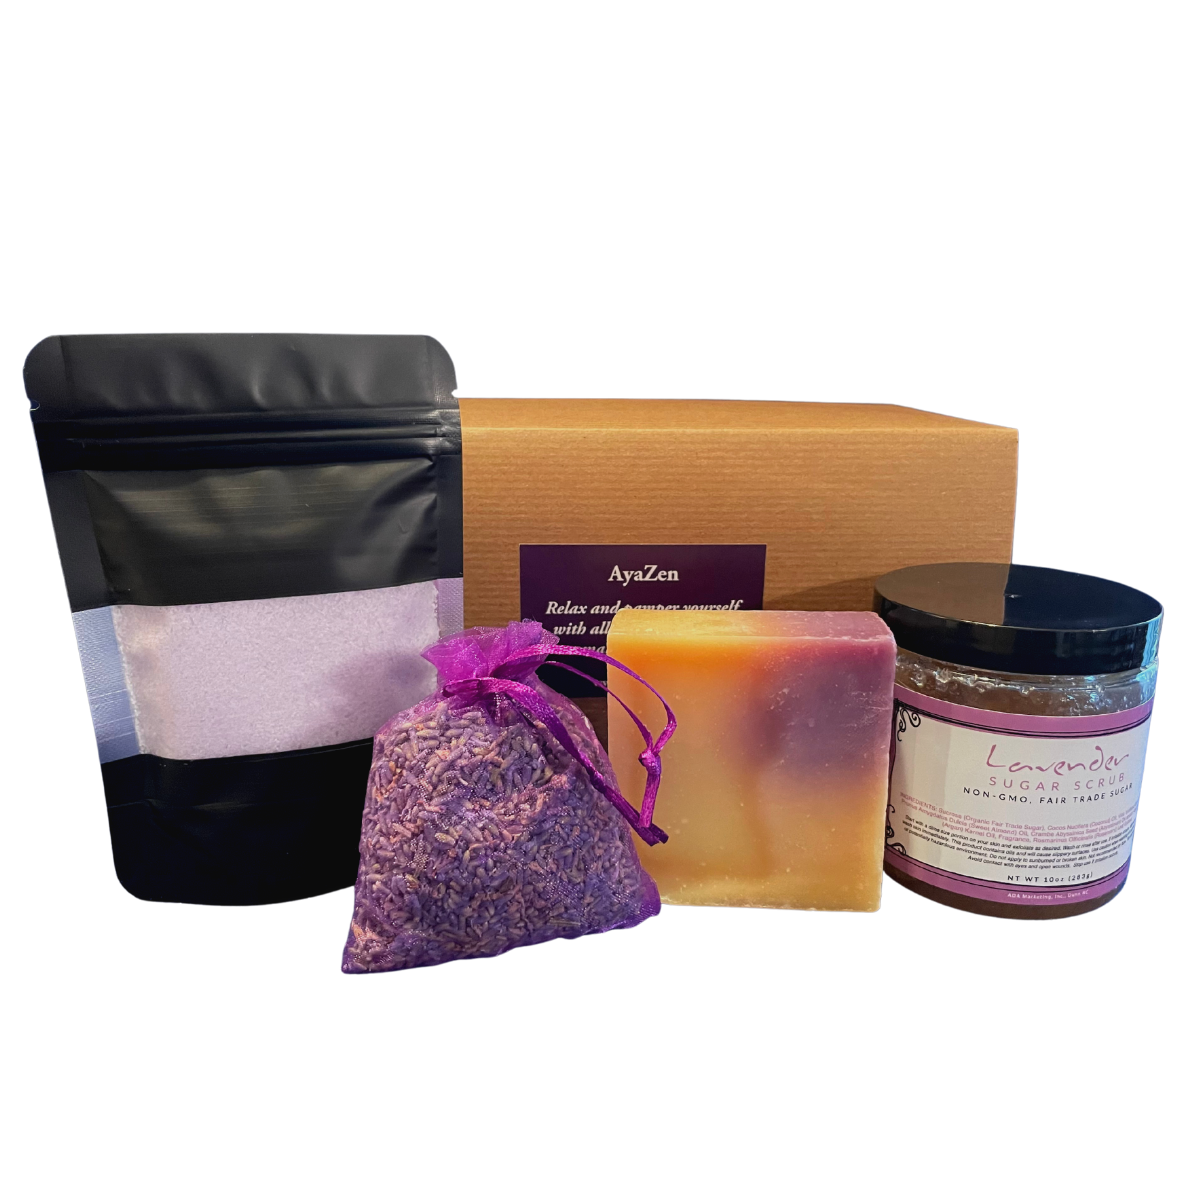 AyaZen Lavender Aromatherapy Bath & Body Spa Gift Set Artisanal Sugar Scrub, Soap, Epsom Salts & Sachet. Made In USA